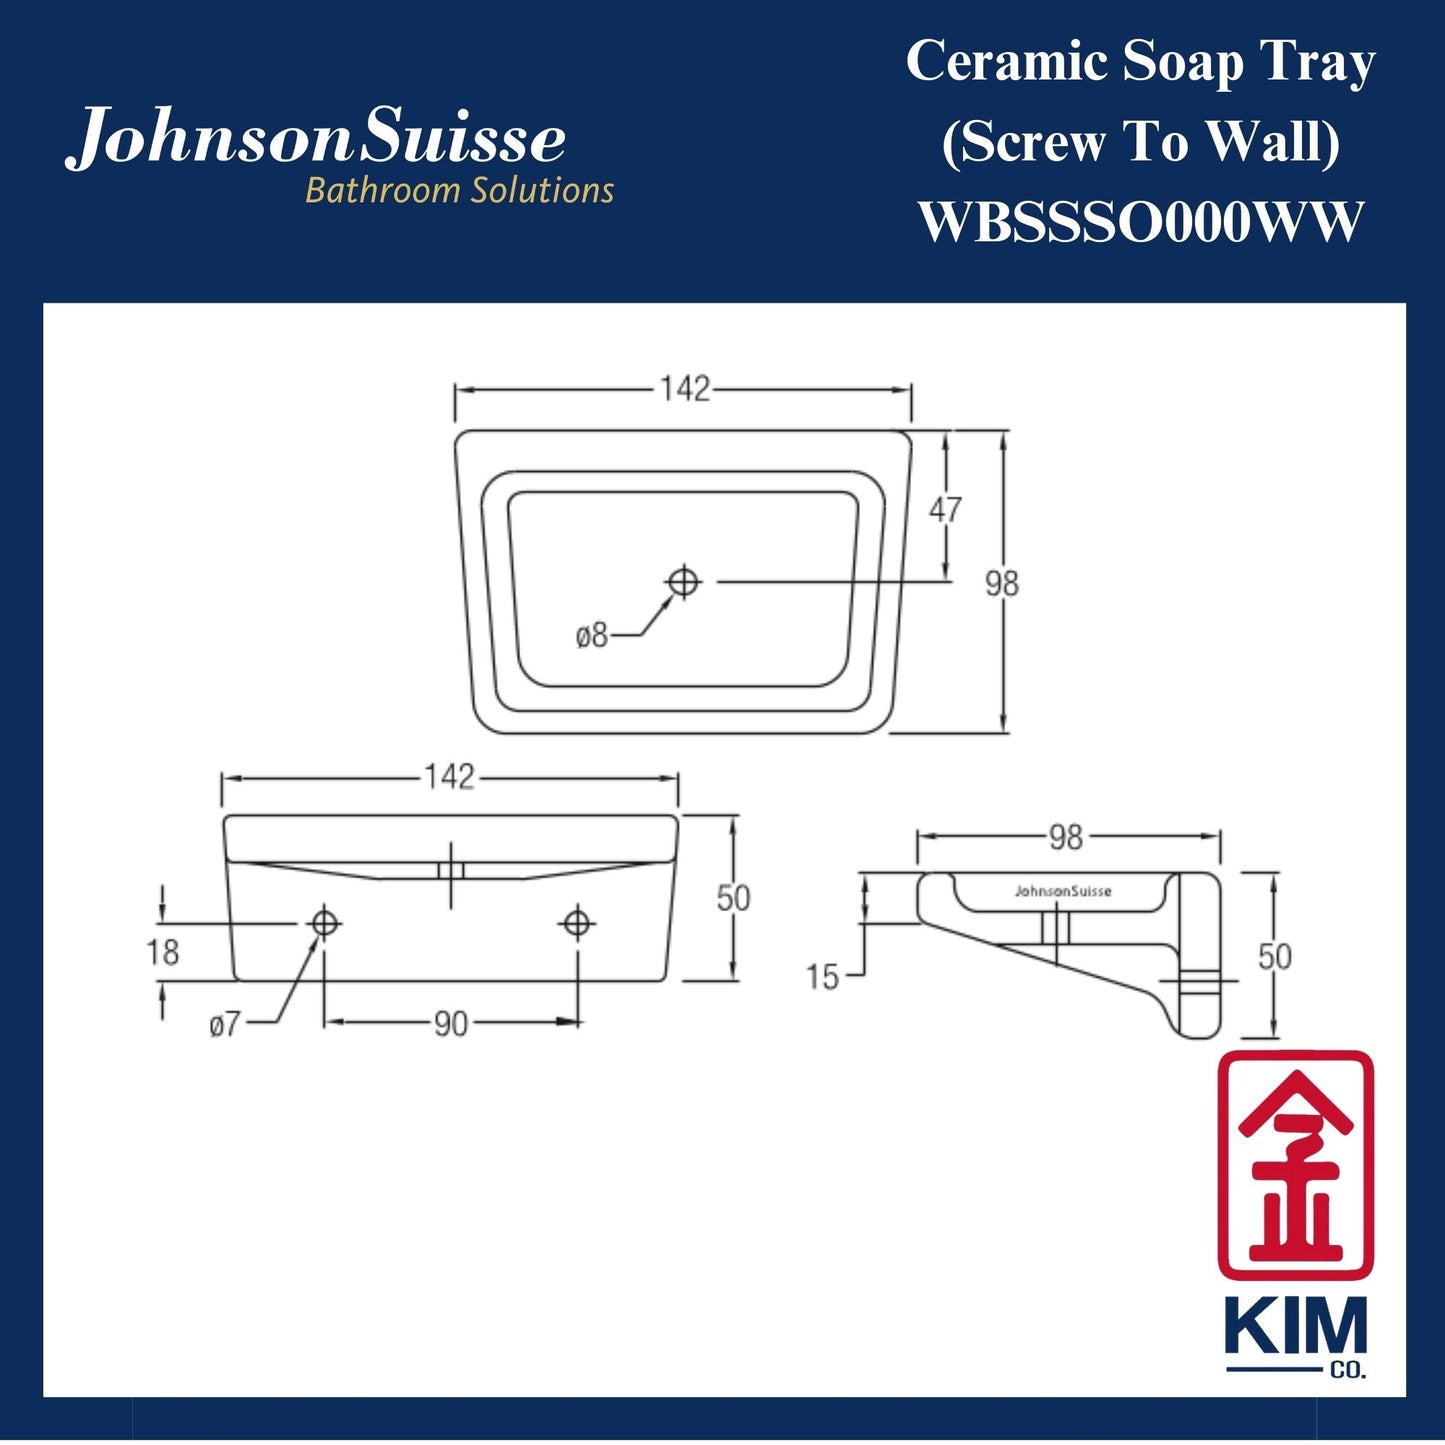 Johnson Suisse Ceramic Screw To Wall Soap Dish (WBSSSO000WW)